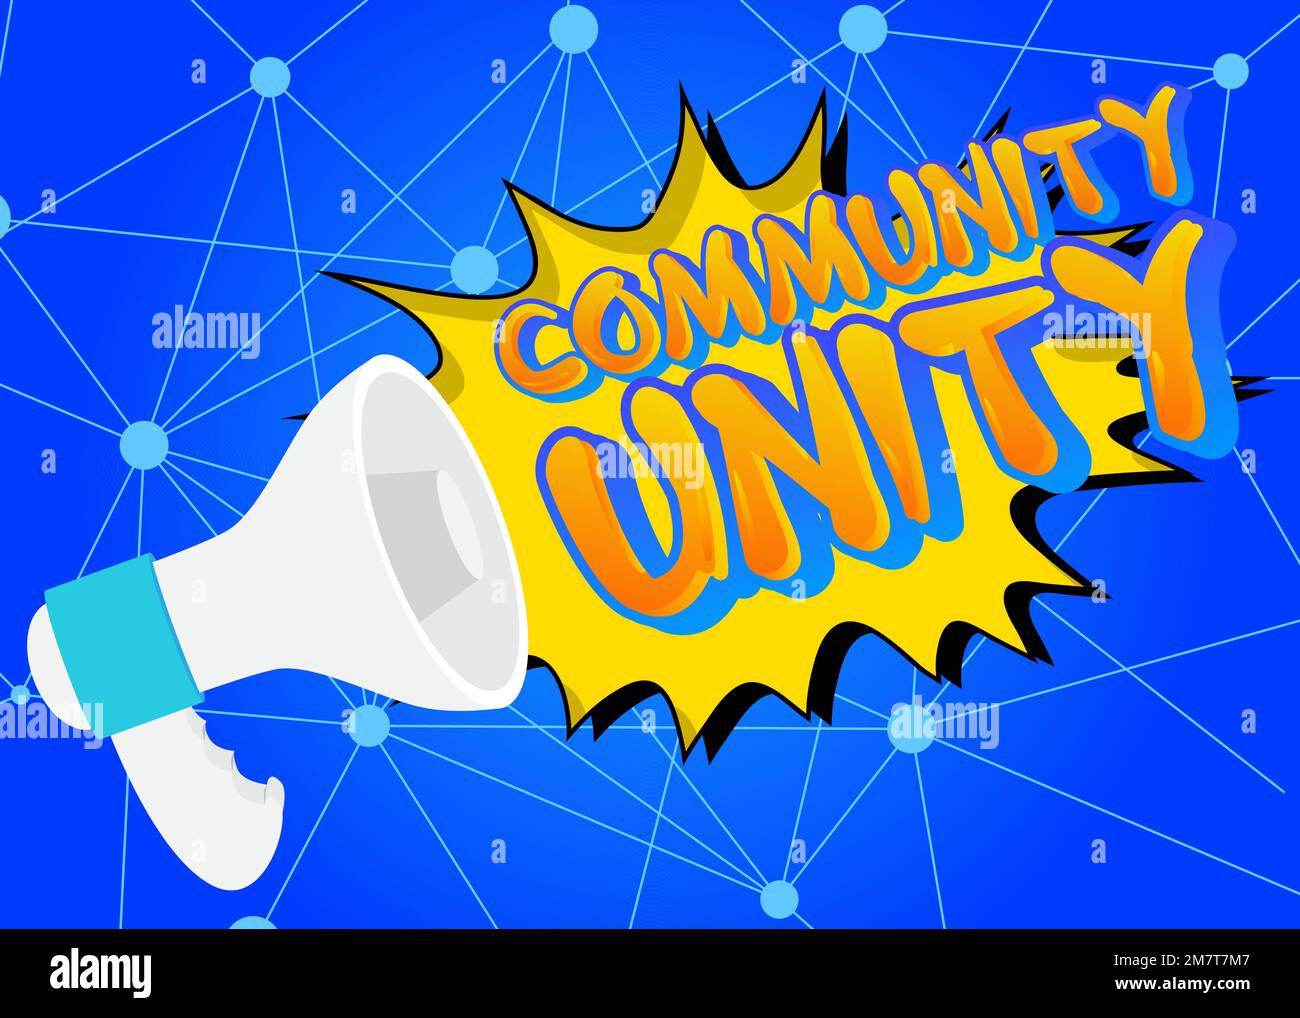 Community Unity text with cartoon Megaphone. Vector Announcement illustration. Stock Vector